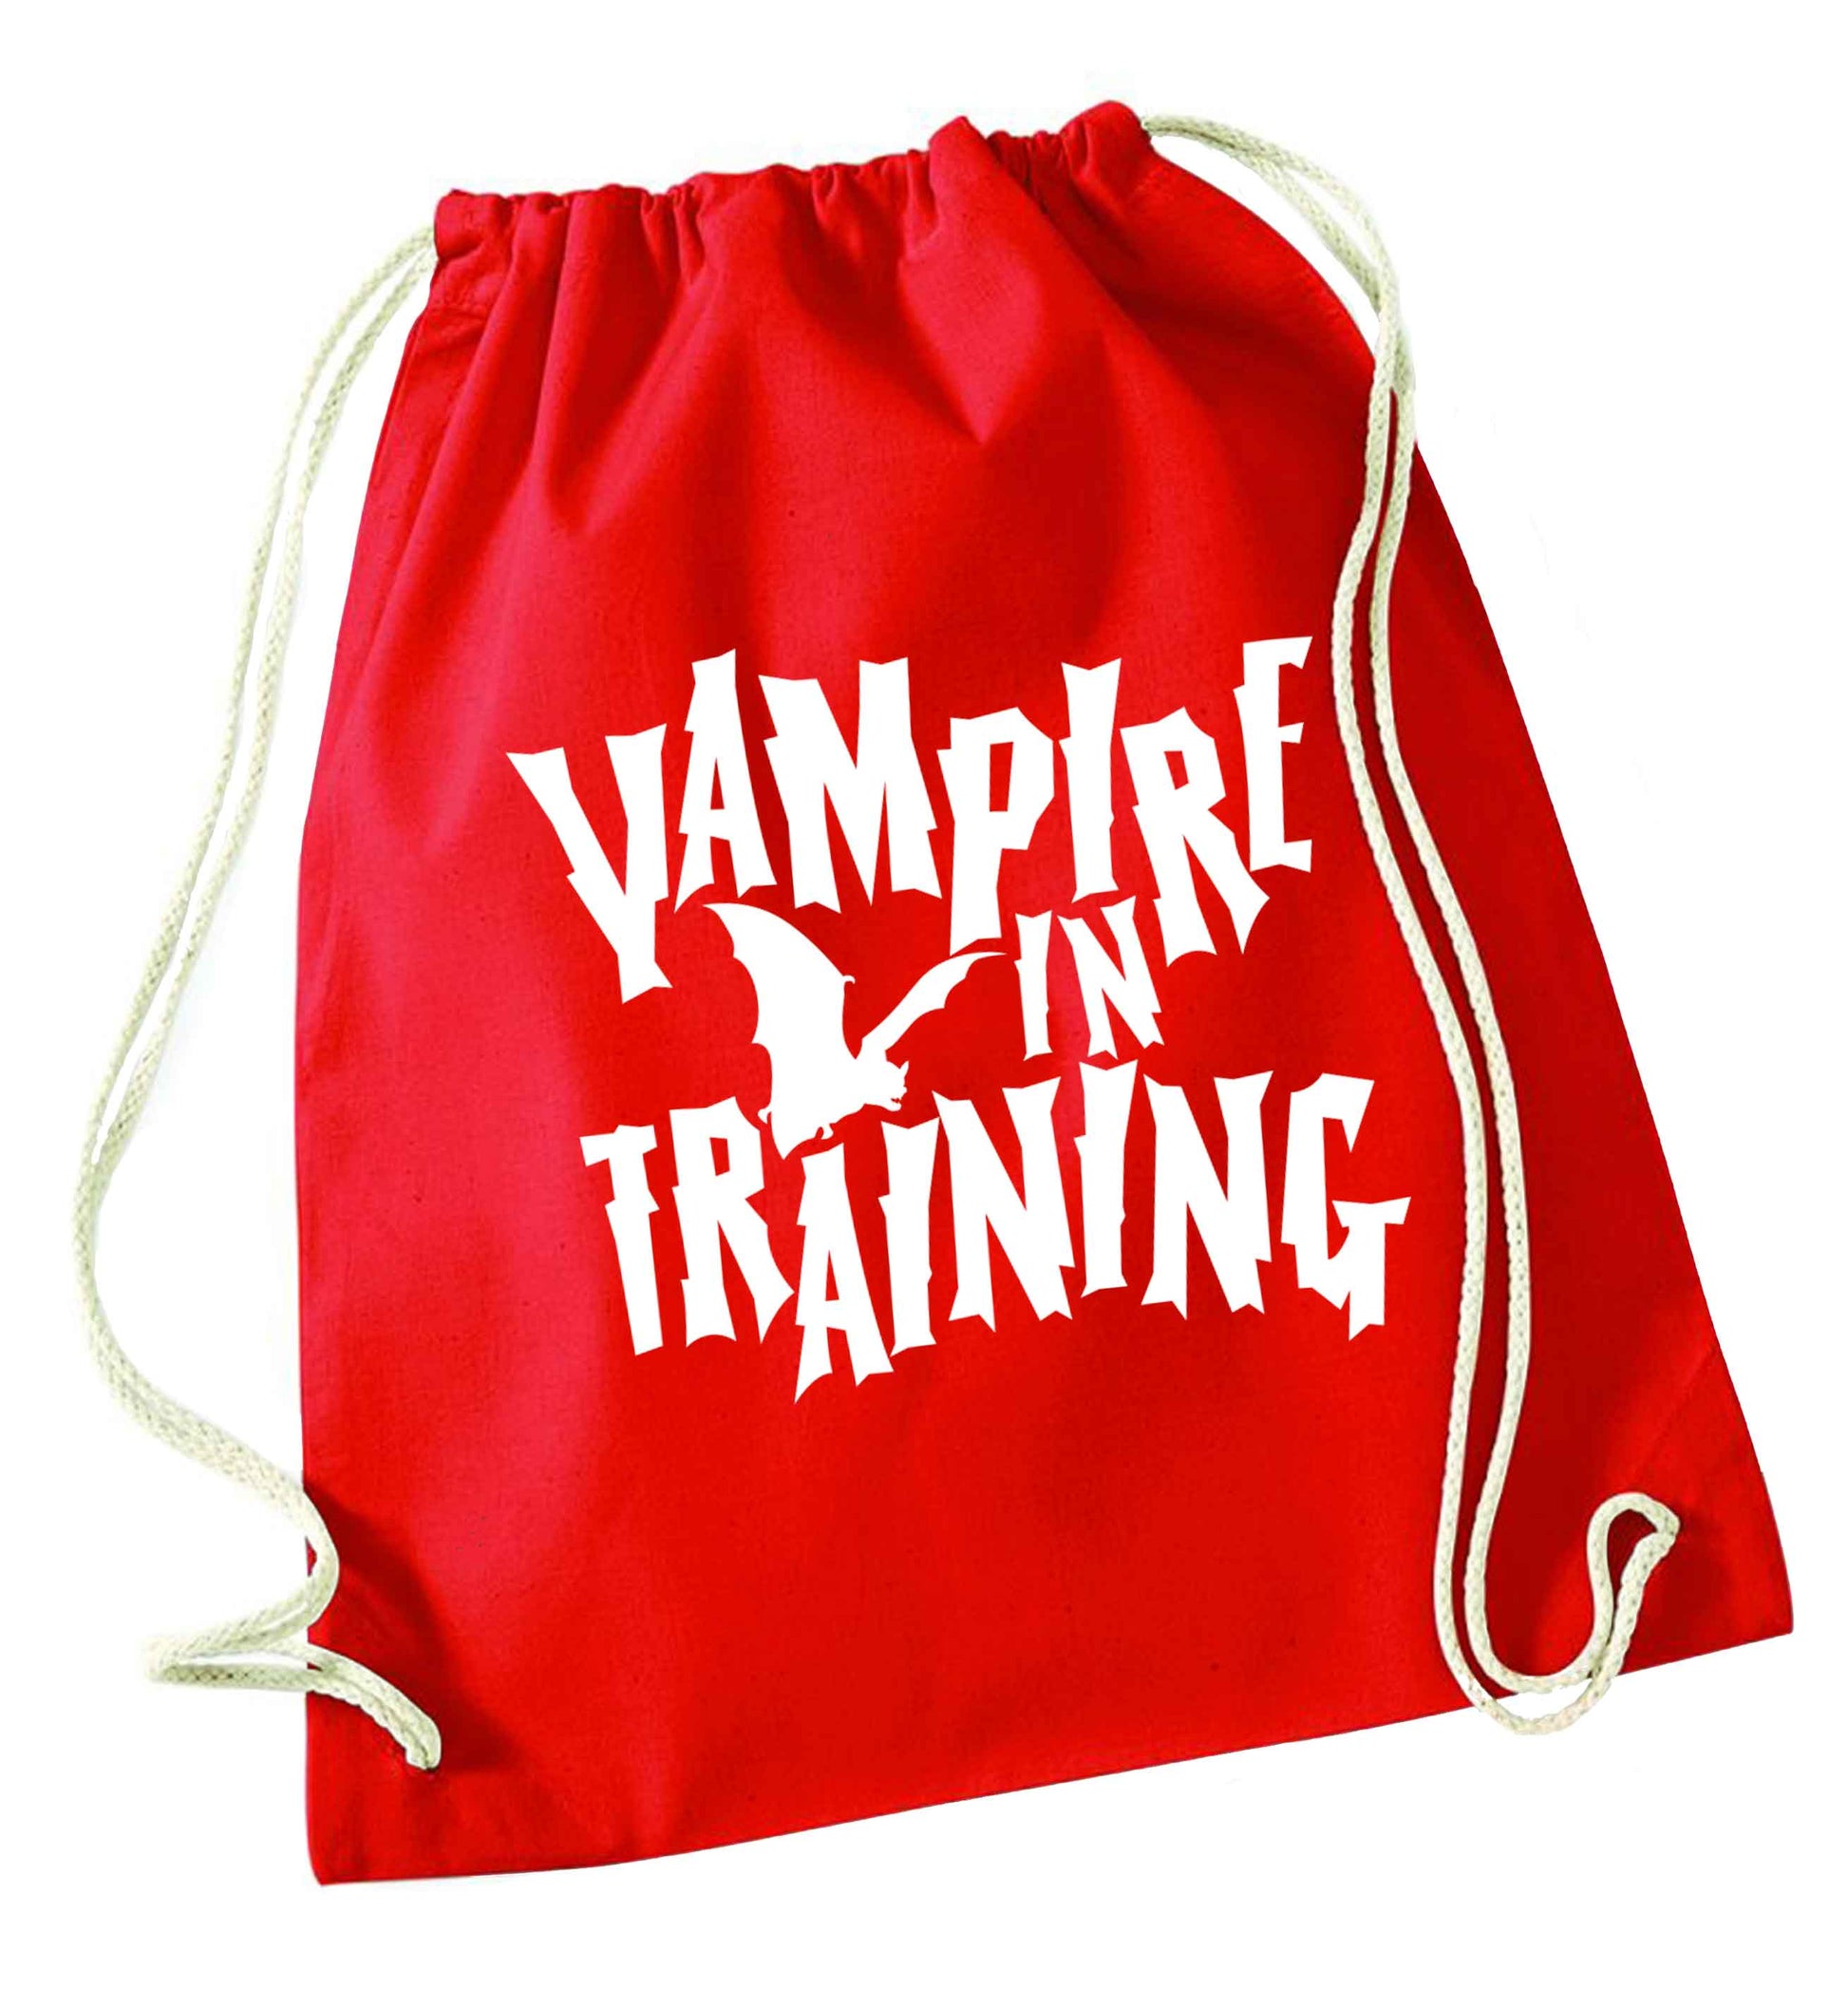 Vampire in training red drawstring bag 